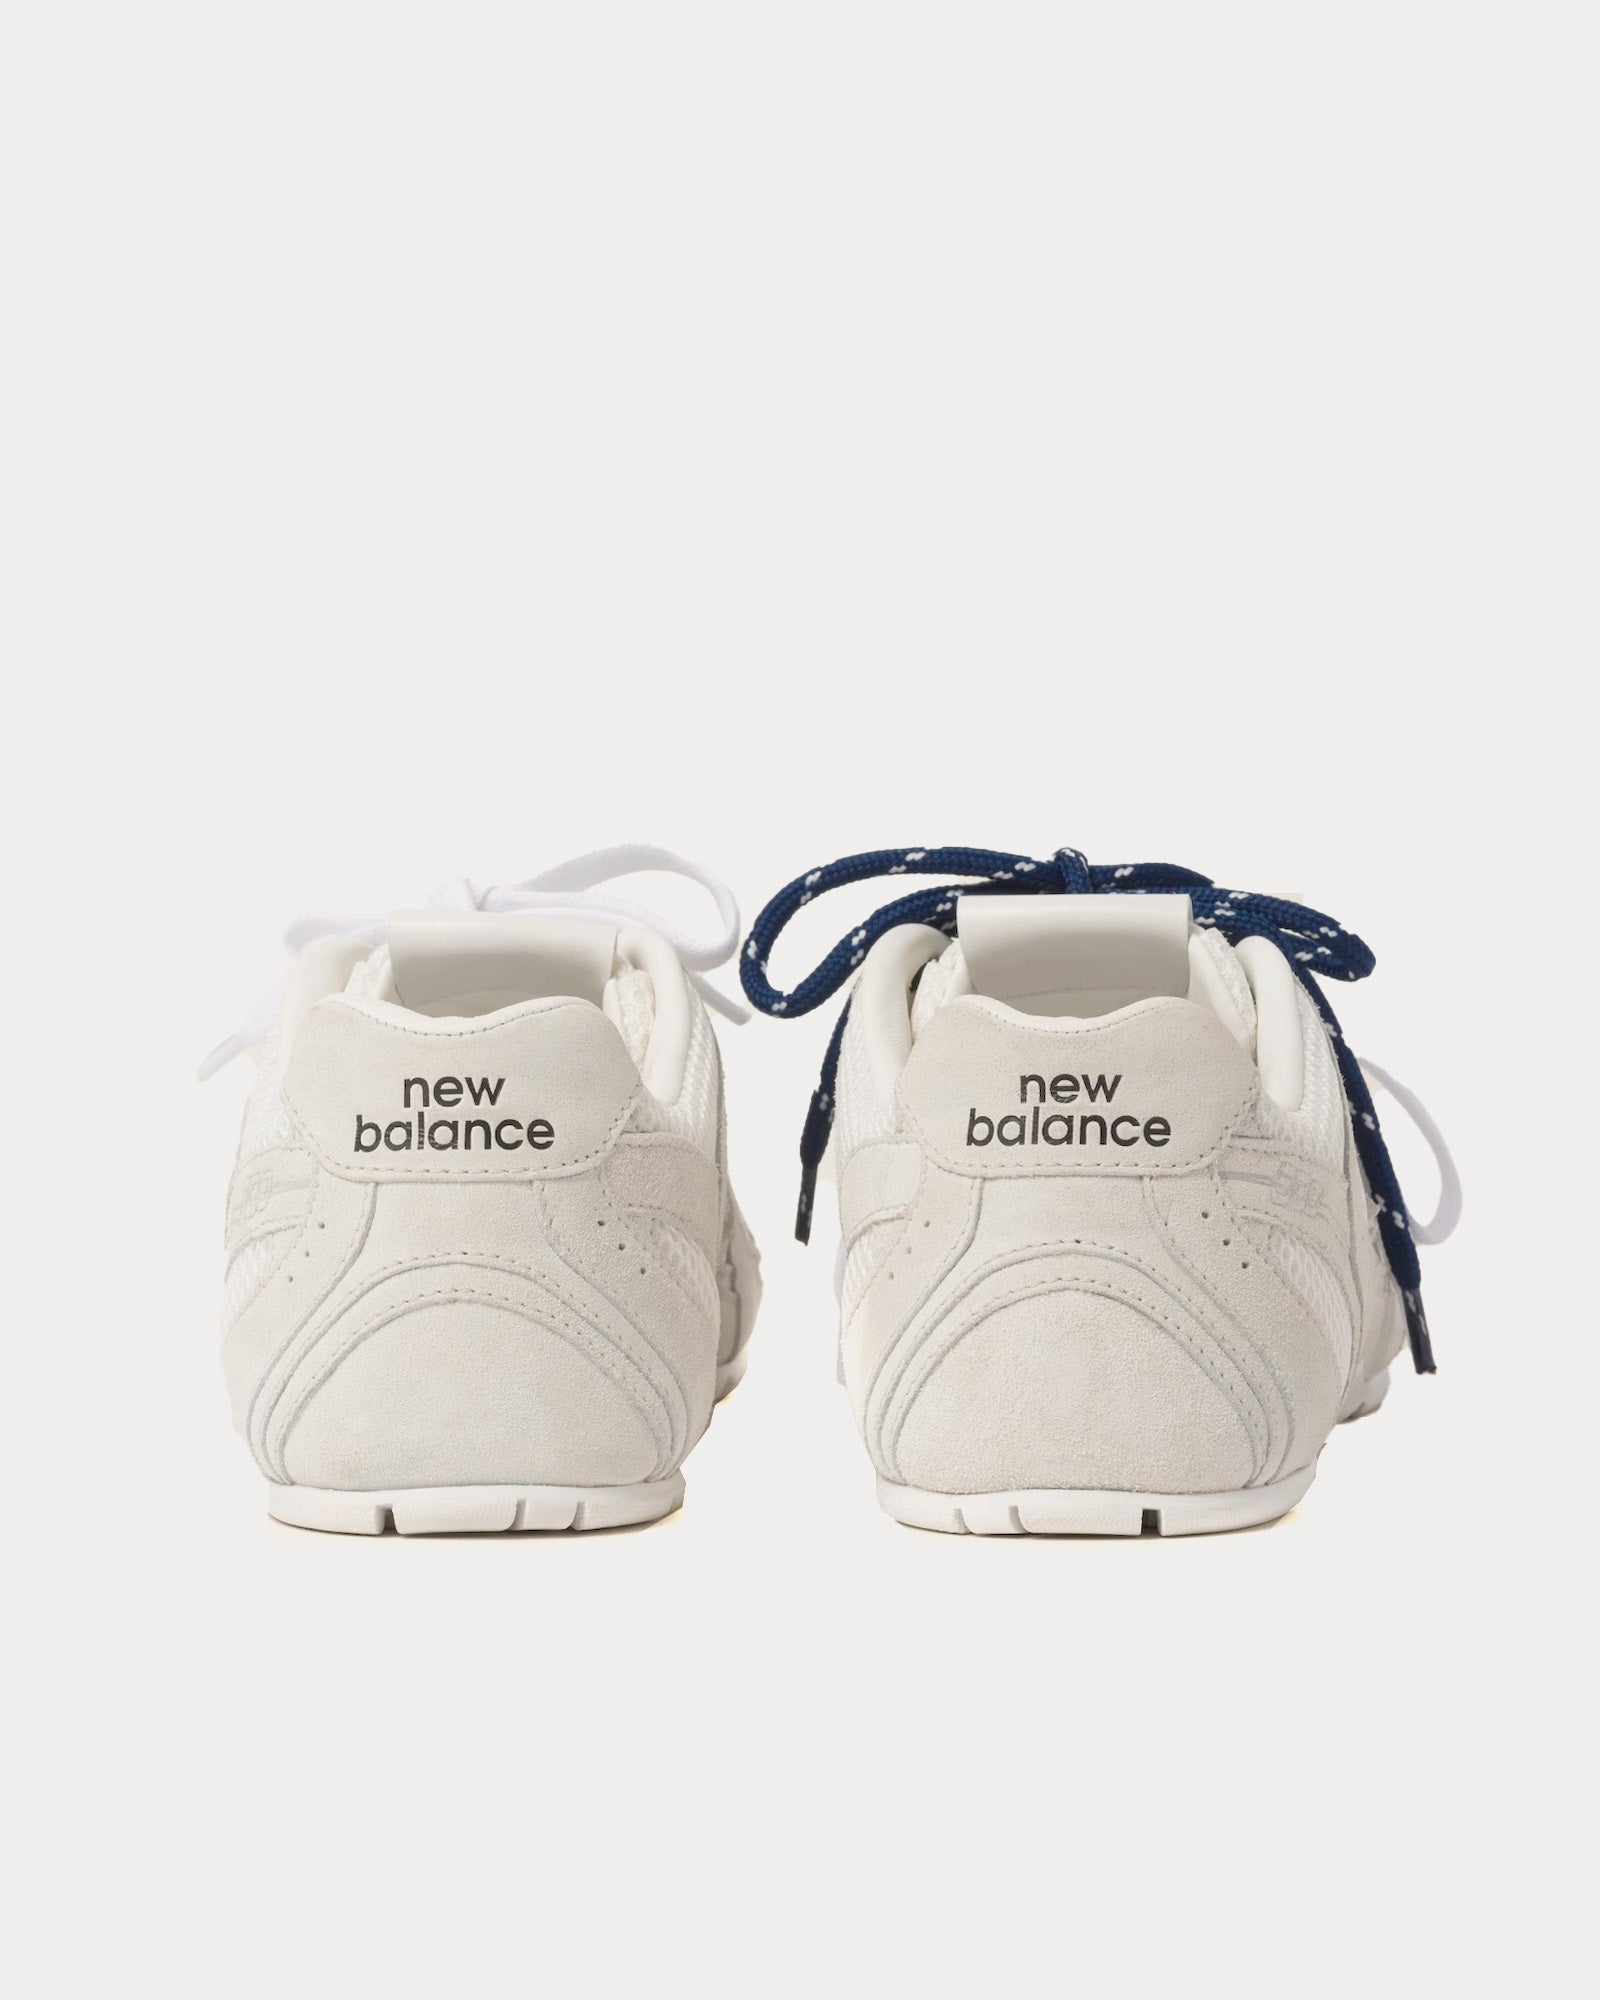 New Balance x Miu Miu - 530 SL Suede & Mesh White Low Top Sneakers